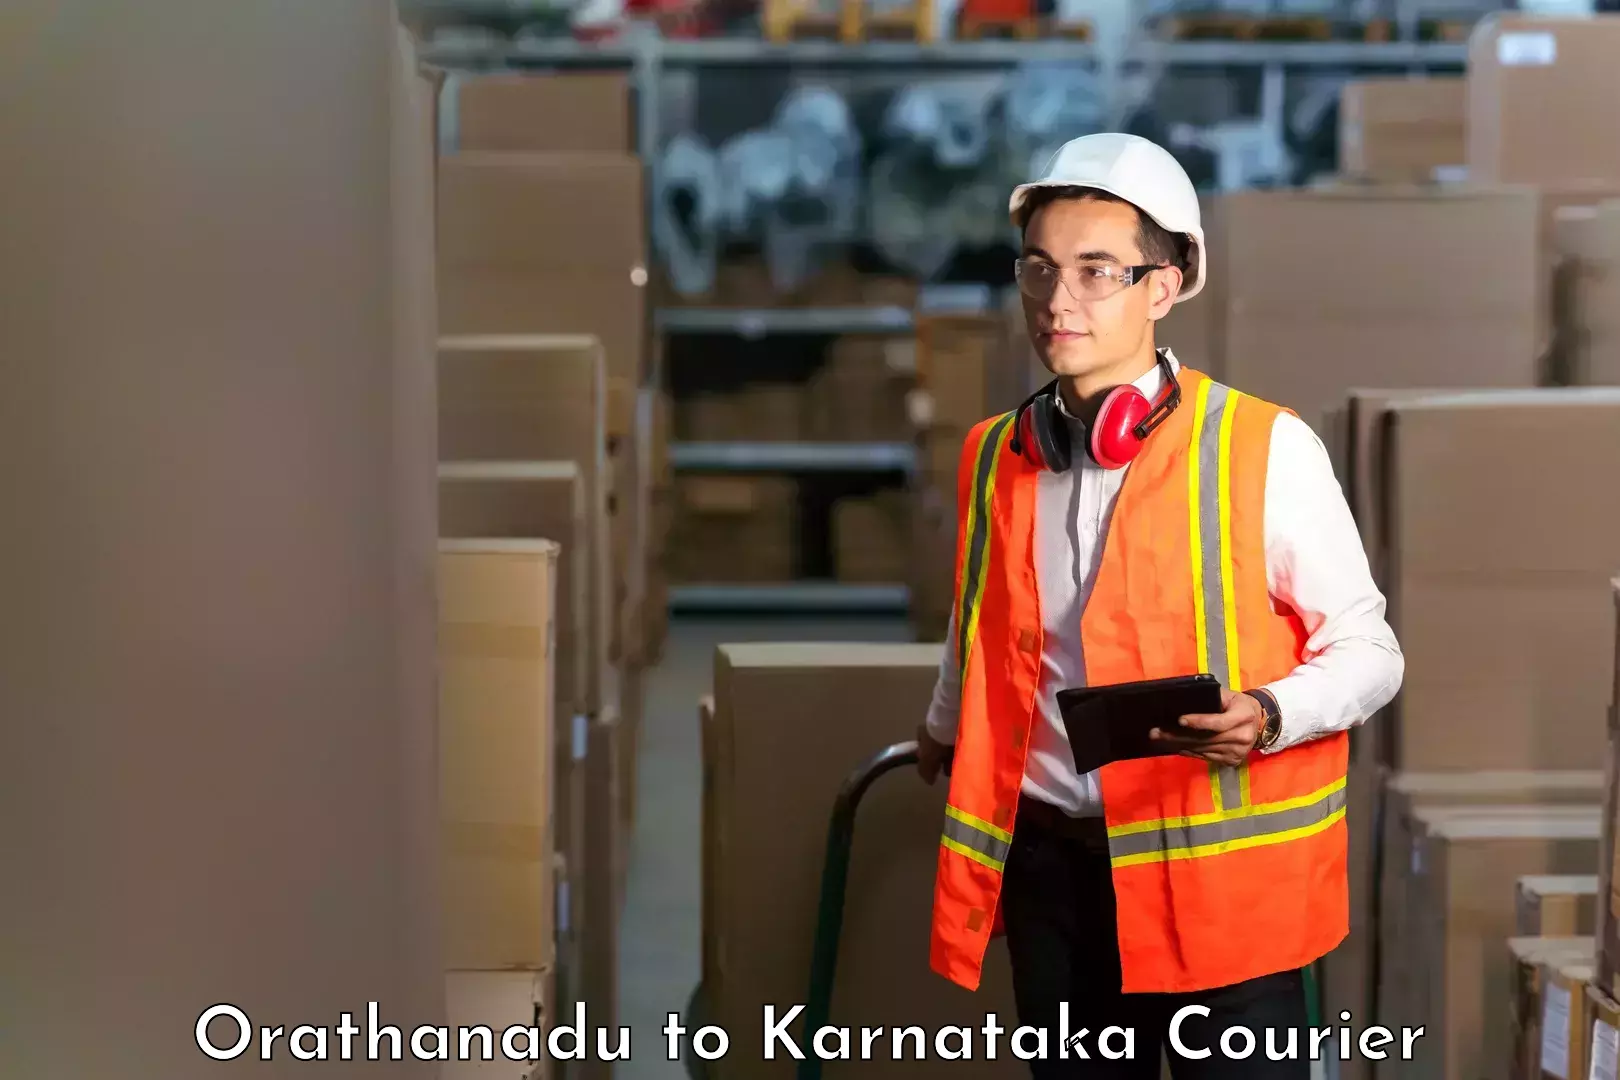 State-of-the-art courier technology Orathanadu to Kundapura